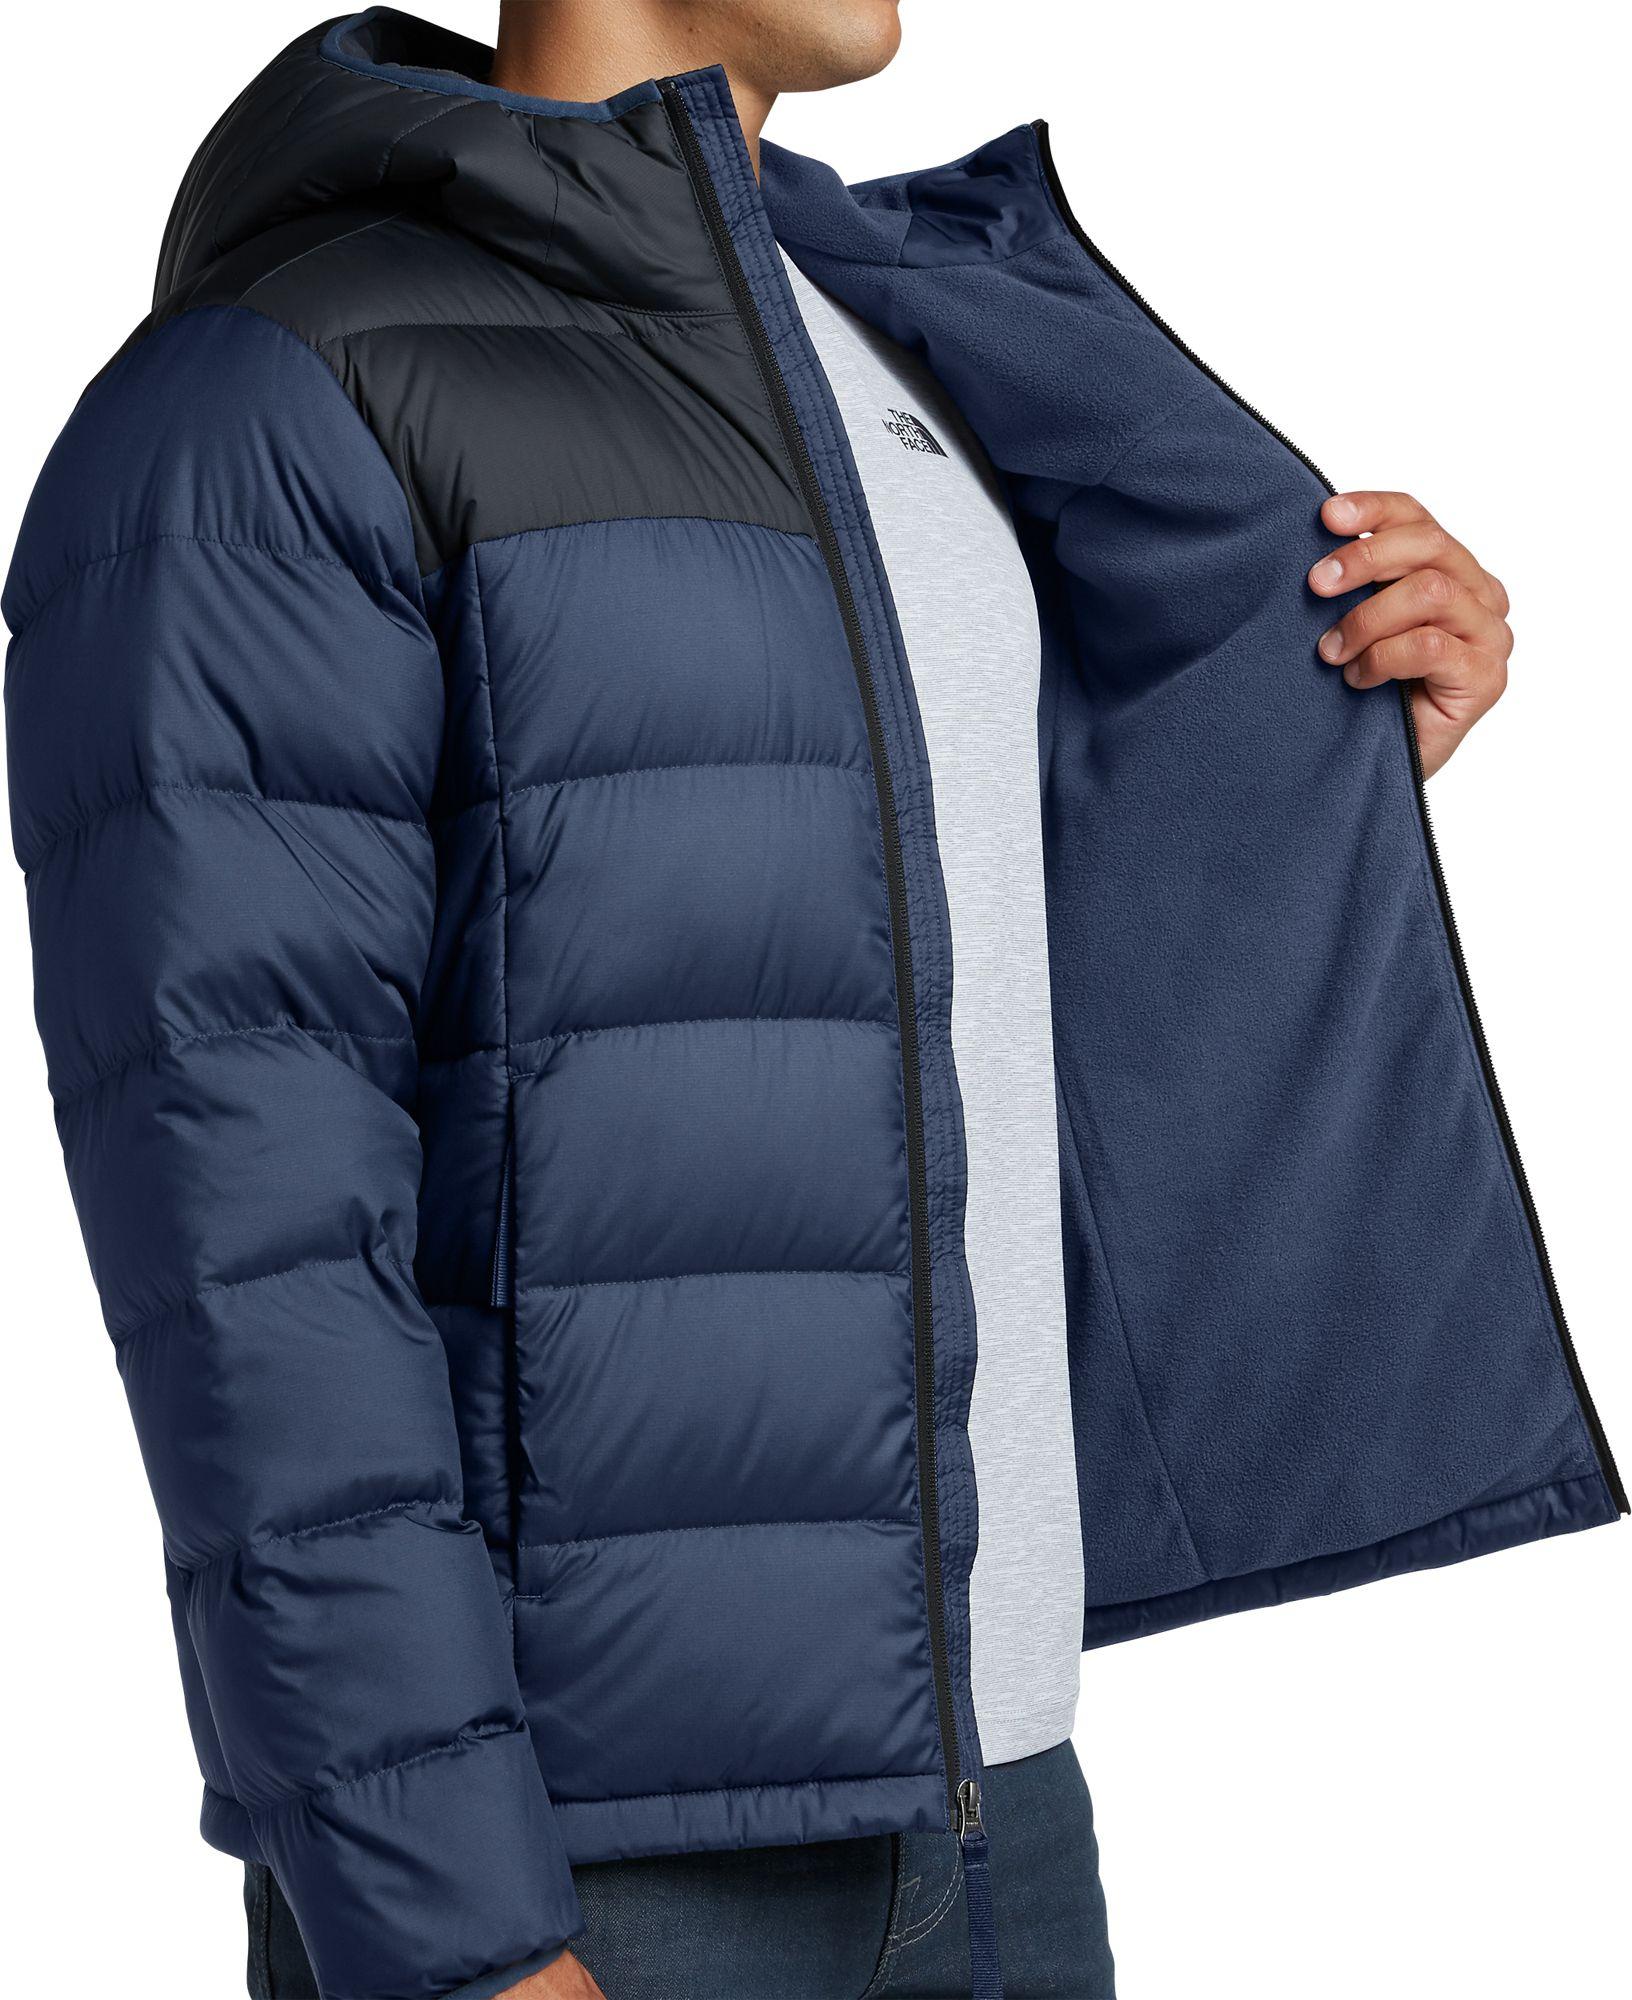 north face men's alpz jacket